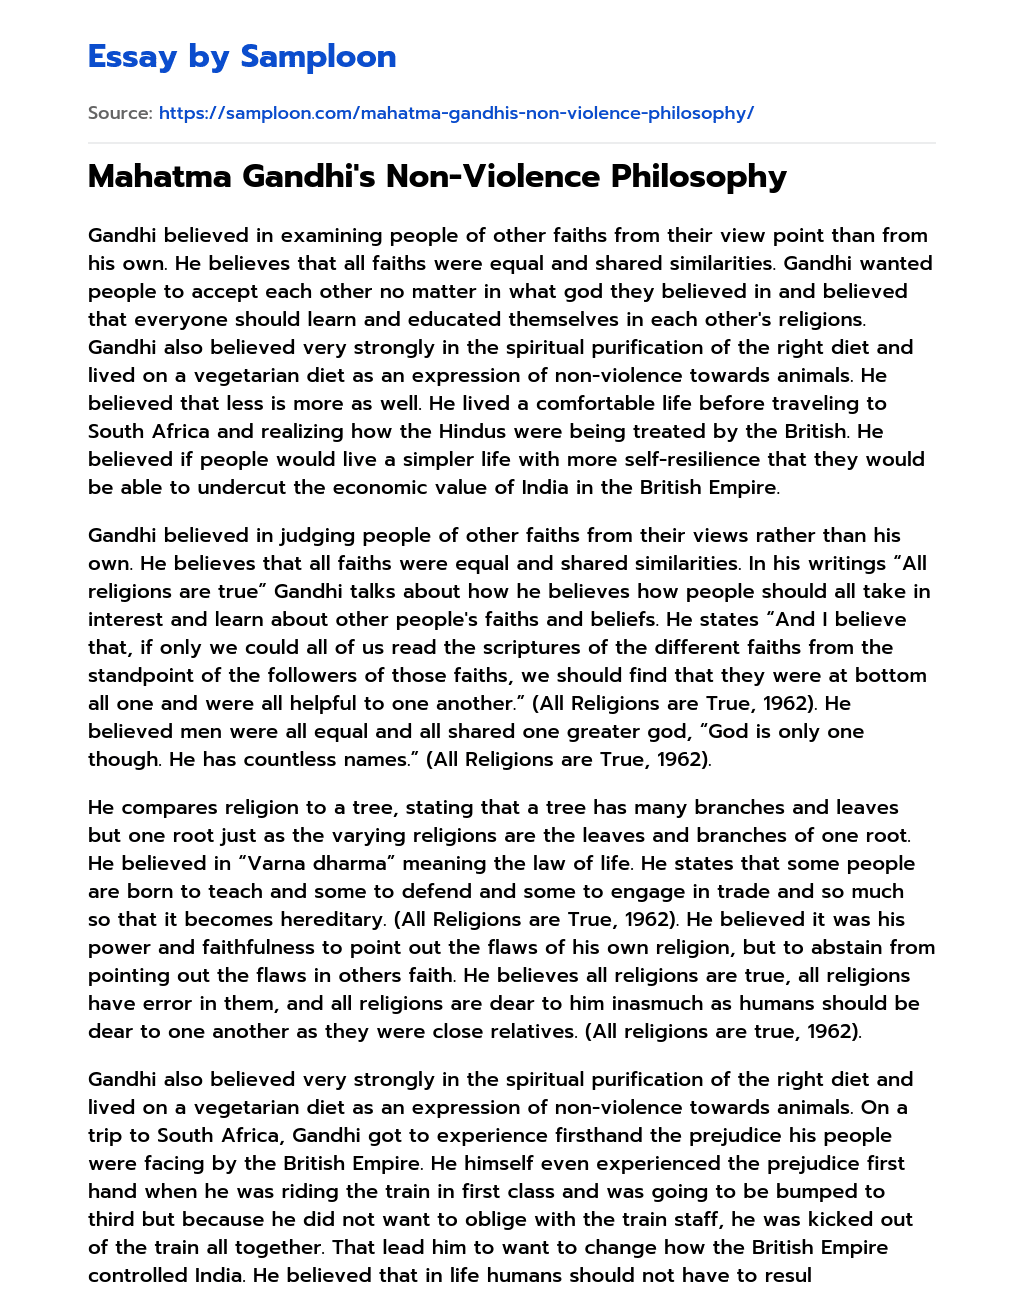 Mahatma Gandhi’s Non-Violence Philosophy essay